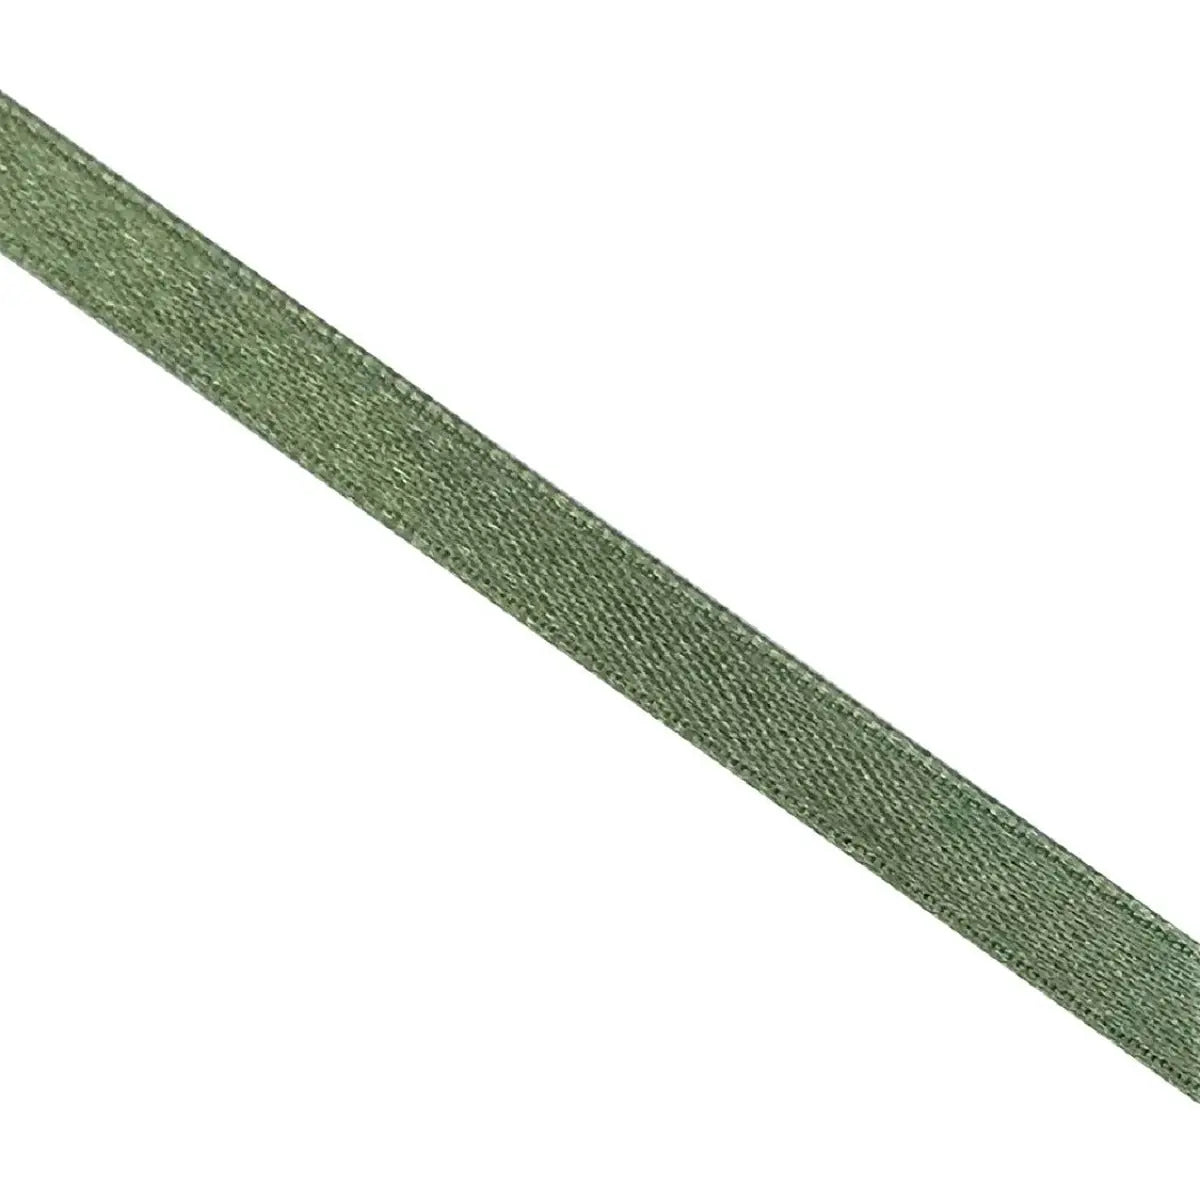 Khaki Green 6mm Double Sided Satin Ribbon